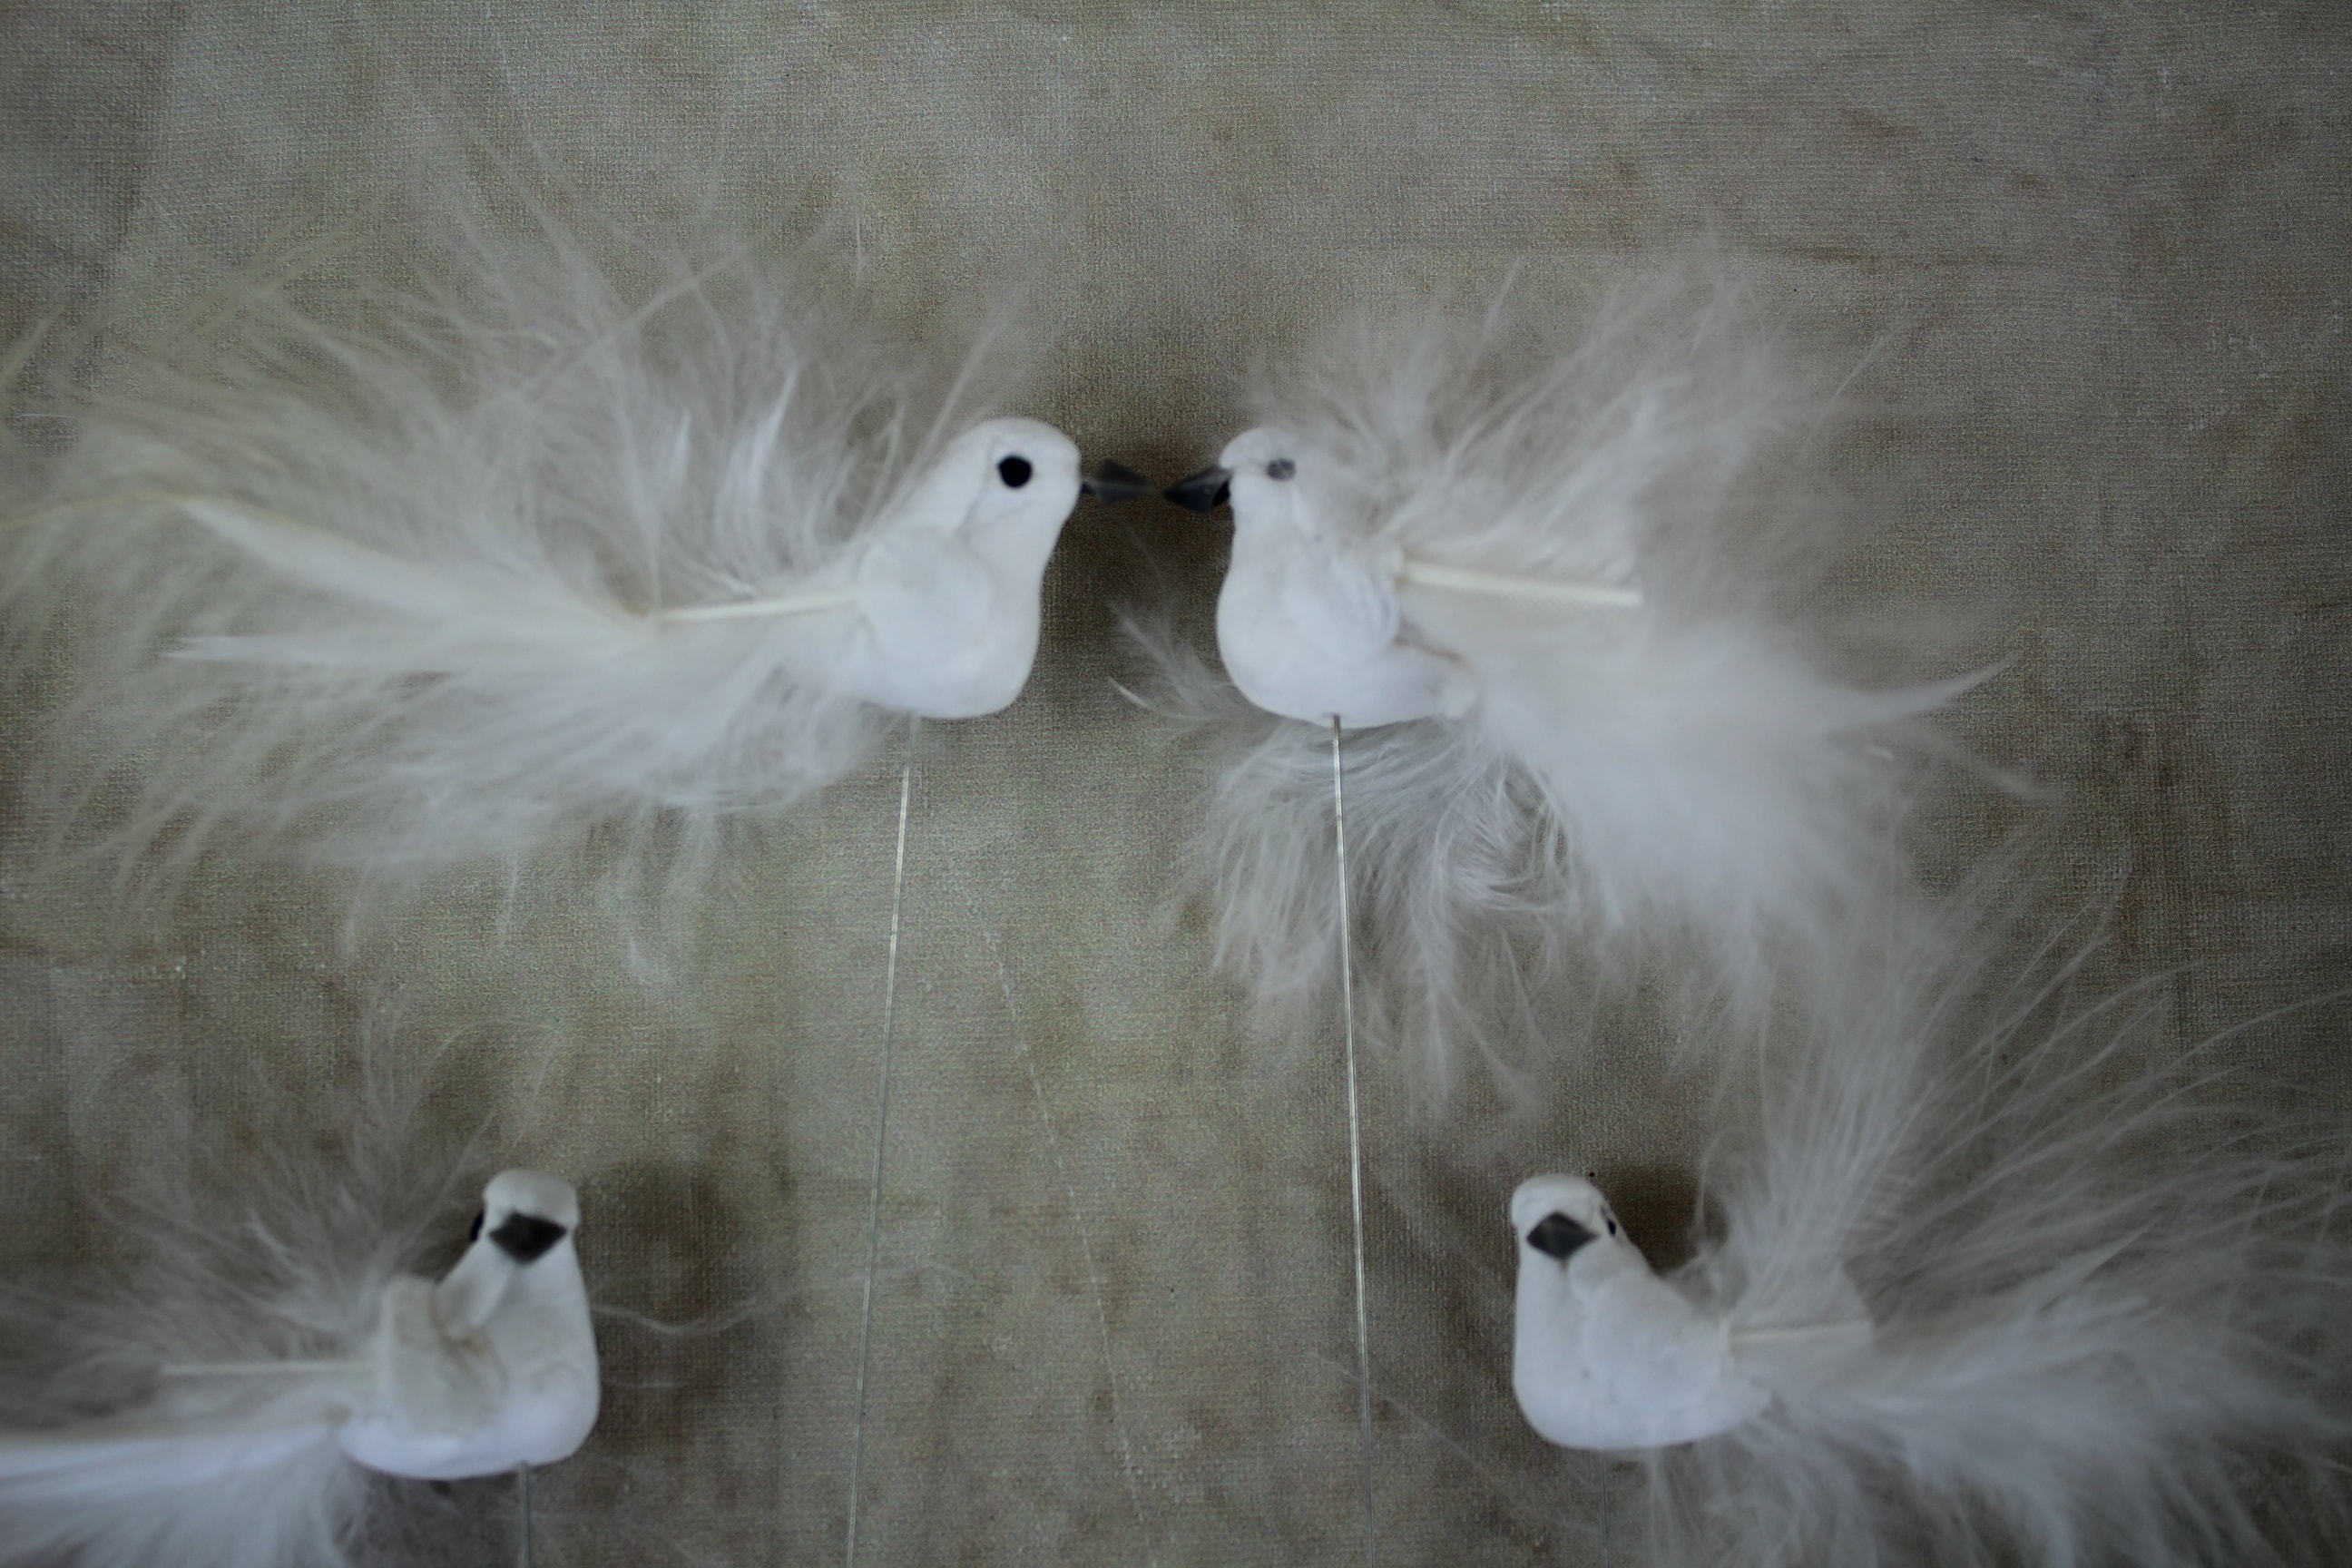 12 x 6 4.5cm doves on wires